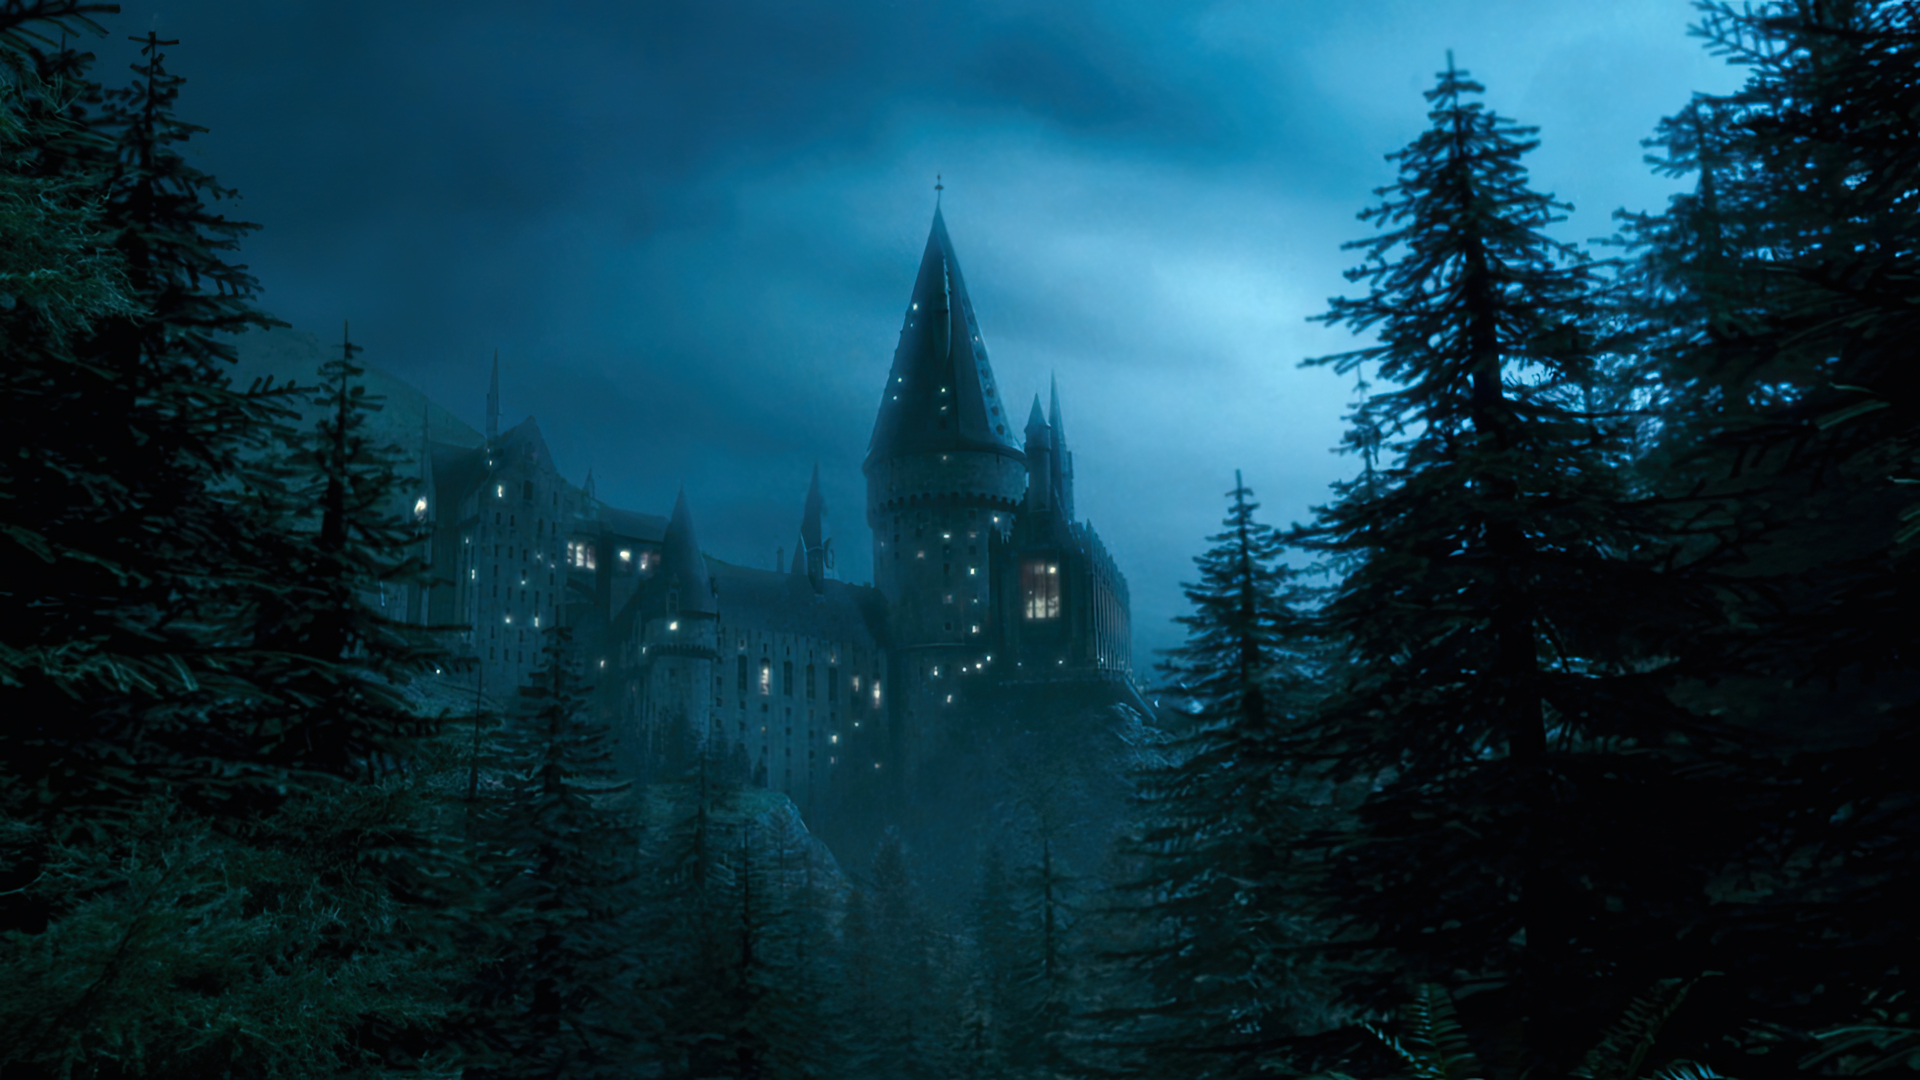 General 1920x1080 Harry Potter and the Prisoner of Azkaban movies film stills Hogwarts trees castle J.K. Rowling Harry Potter night sky